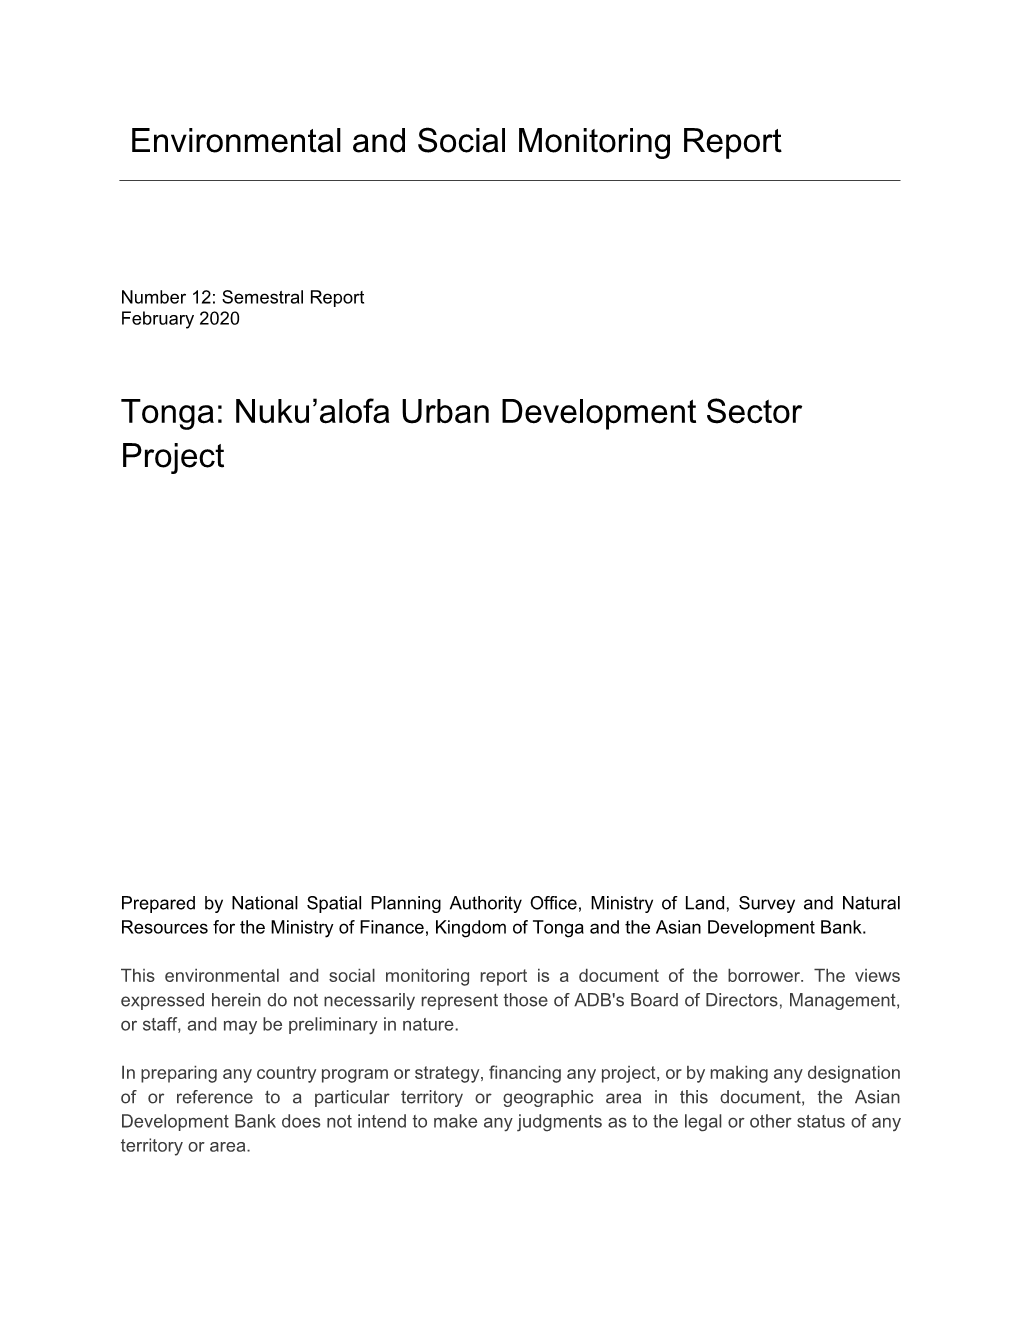 Tonga: Nuku'alofa Urban Development Sector Project